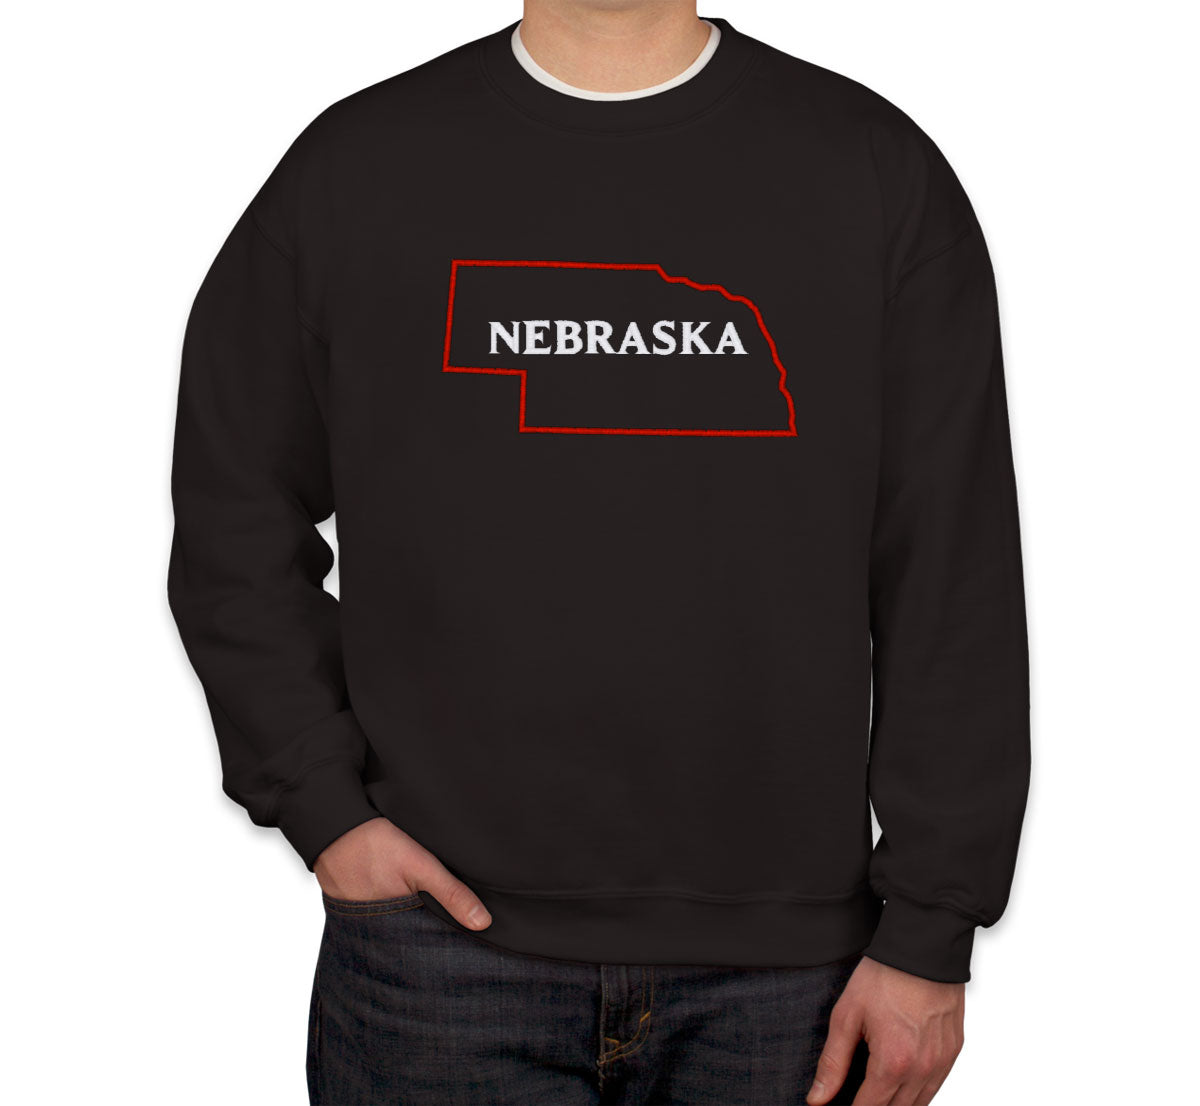 Nebraska Embroidered Unisex Sweatshirt